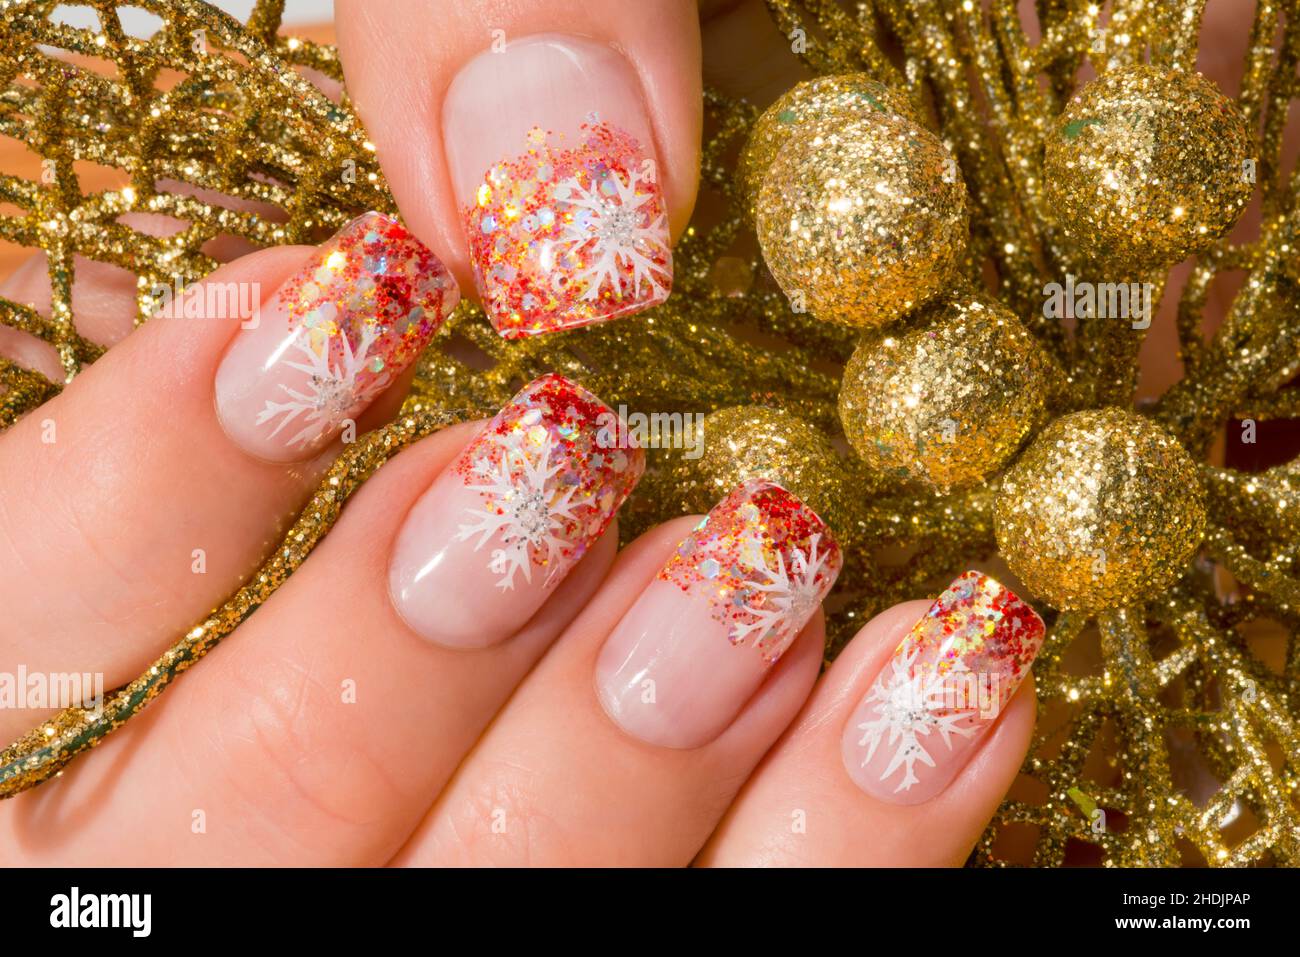 White nails with gold ring finger | Ring finger nails, White nails with gold,  Gold nails